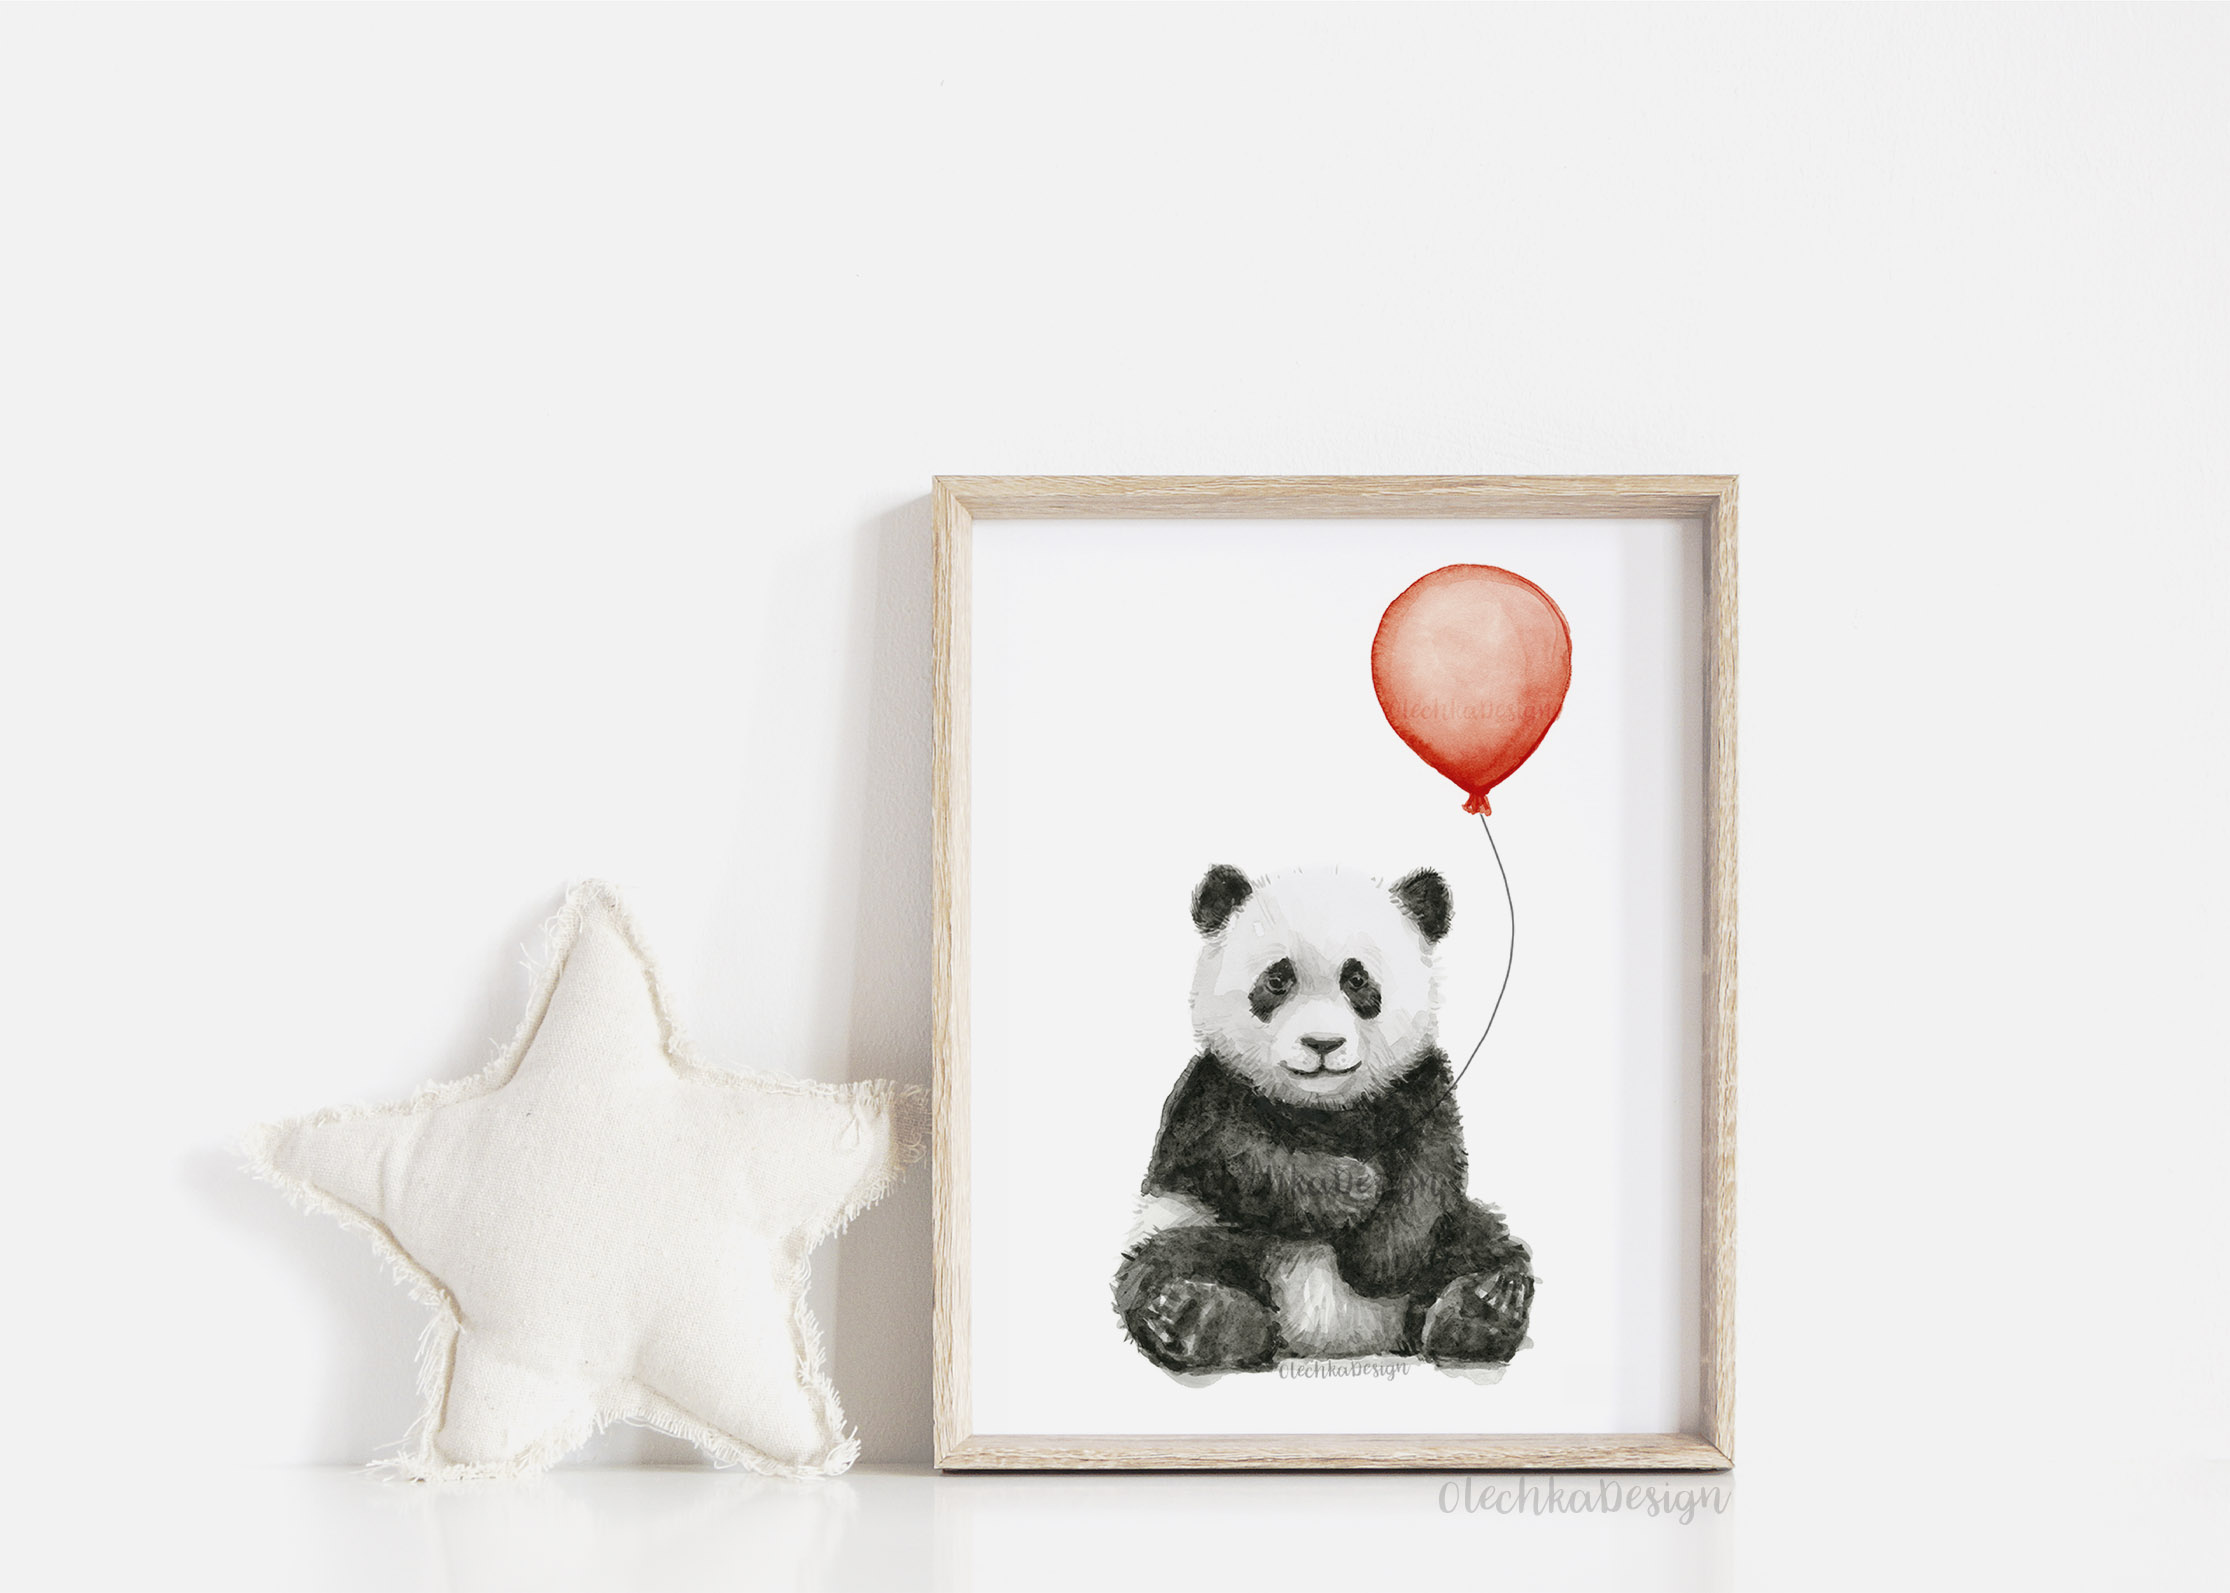 panda-baby-balloon-red-art.jpg